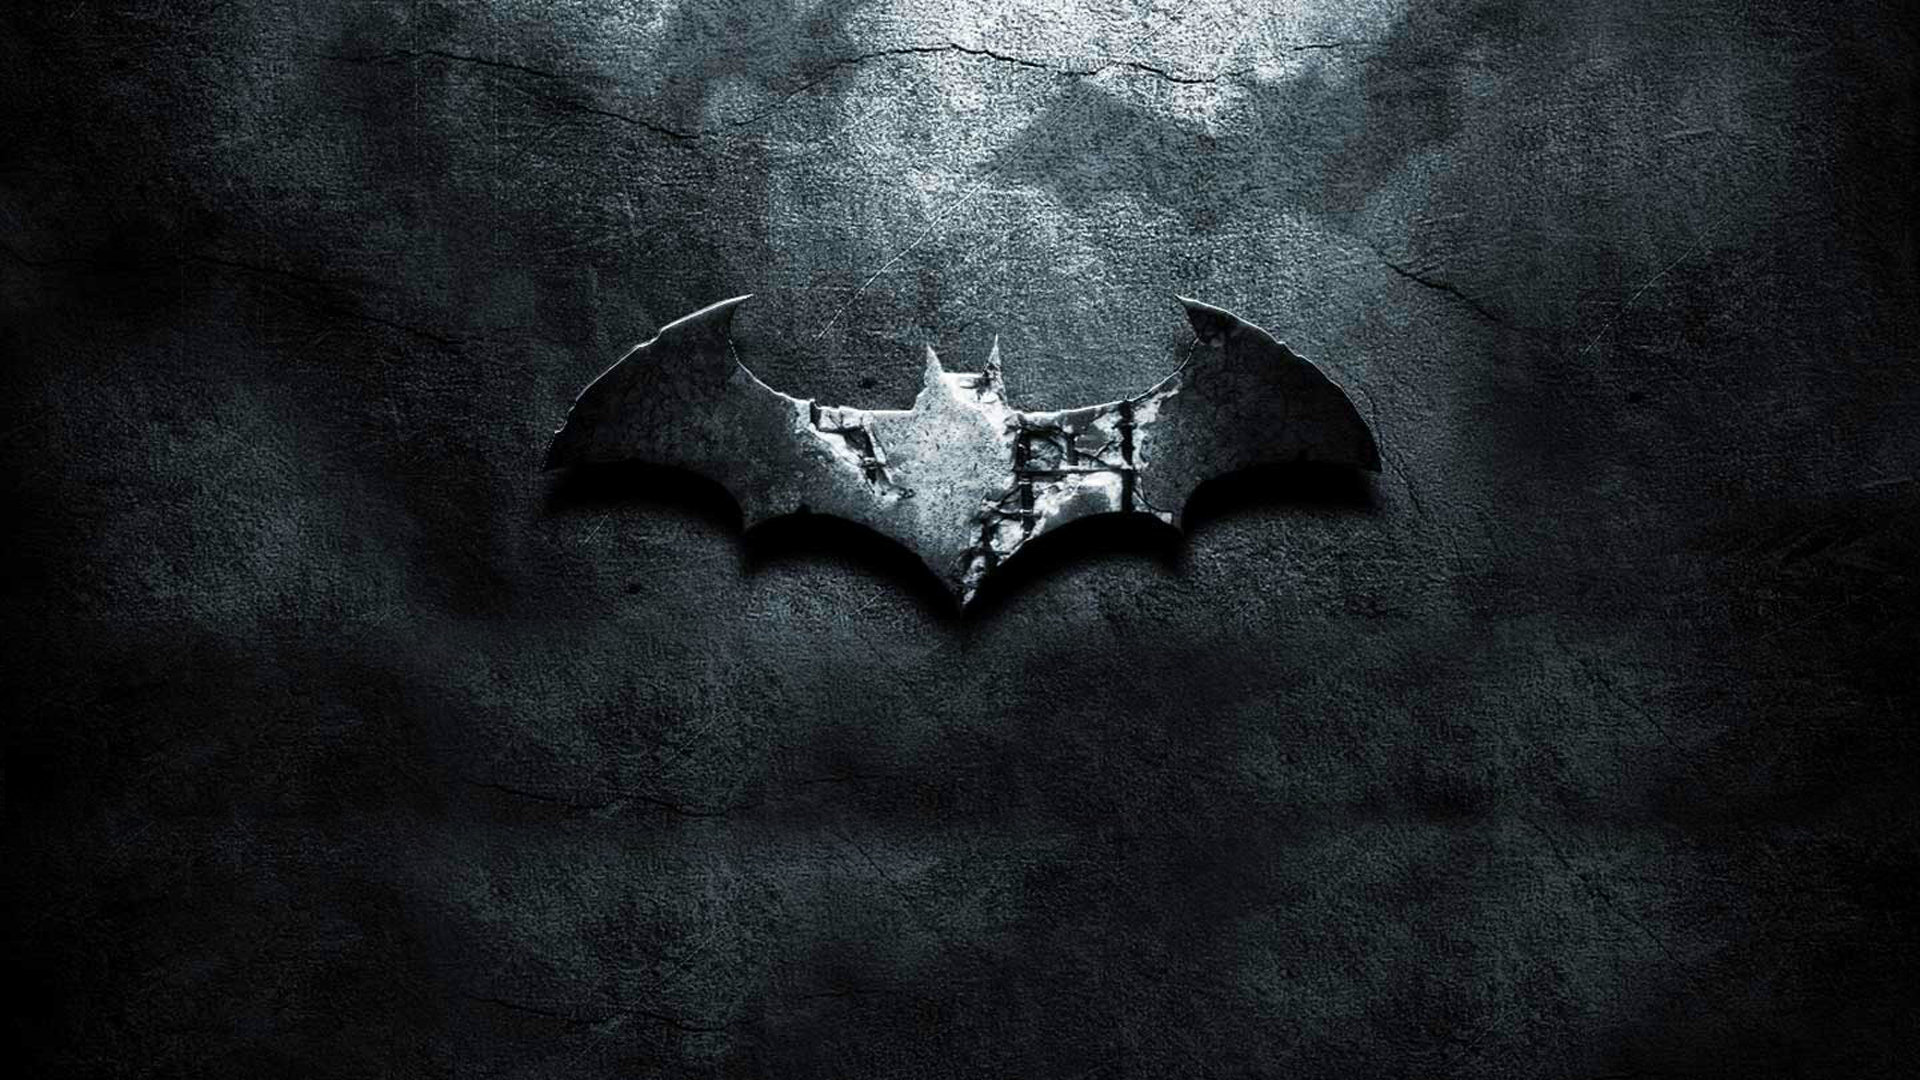 750+ Batman Pictures [HQ] | Download Free Images on Unsplash